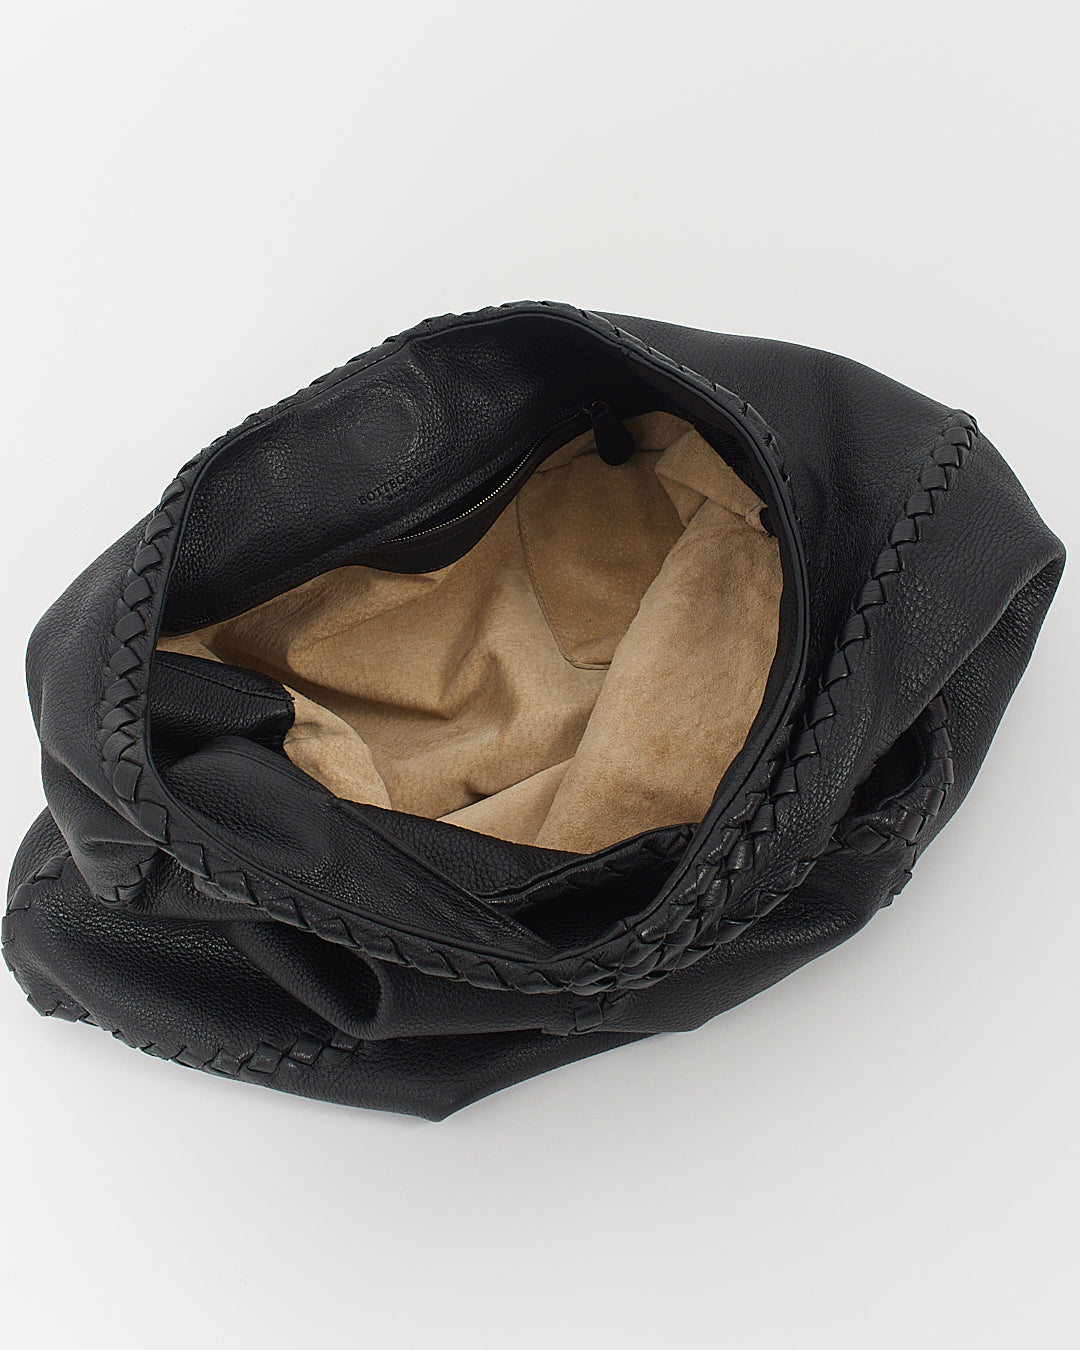 Bottega Veneta Black Leather Hobo Shoulder  Bag